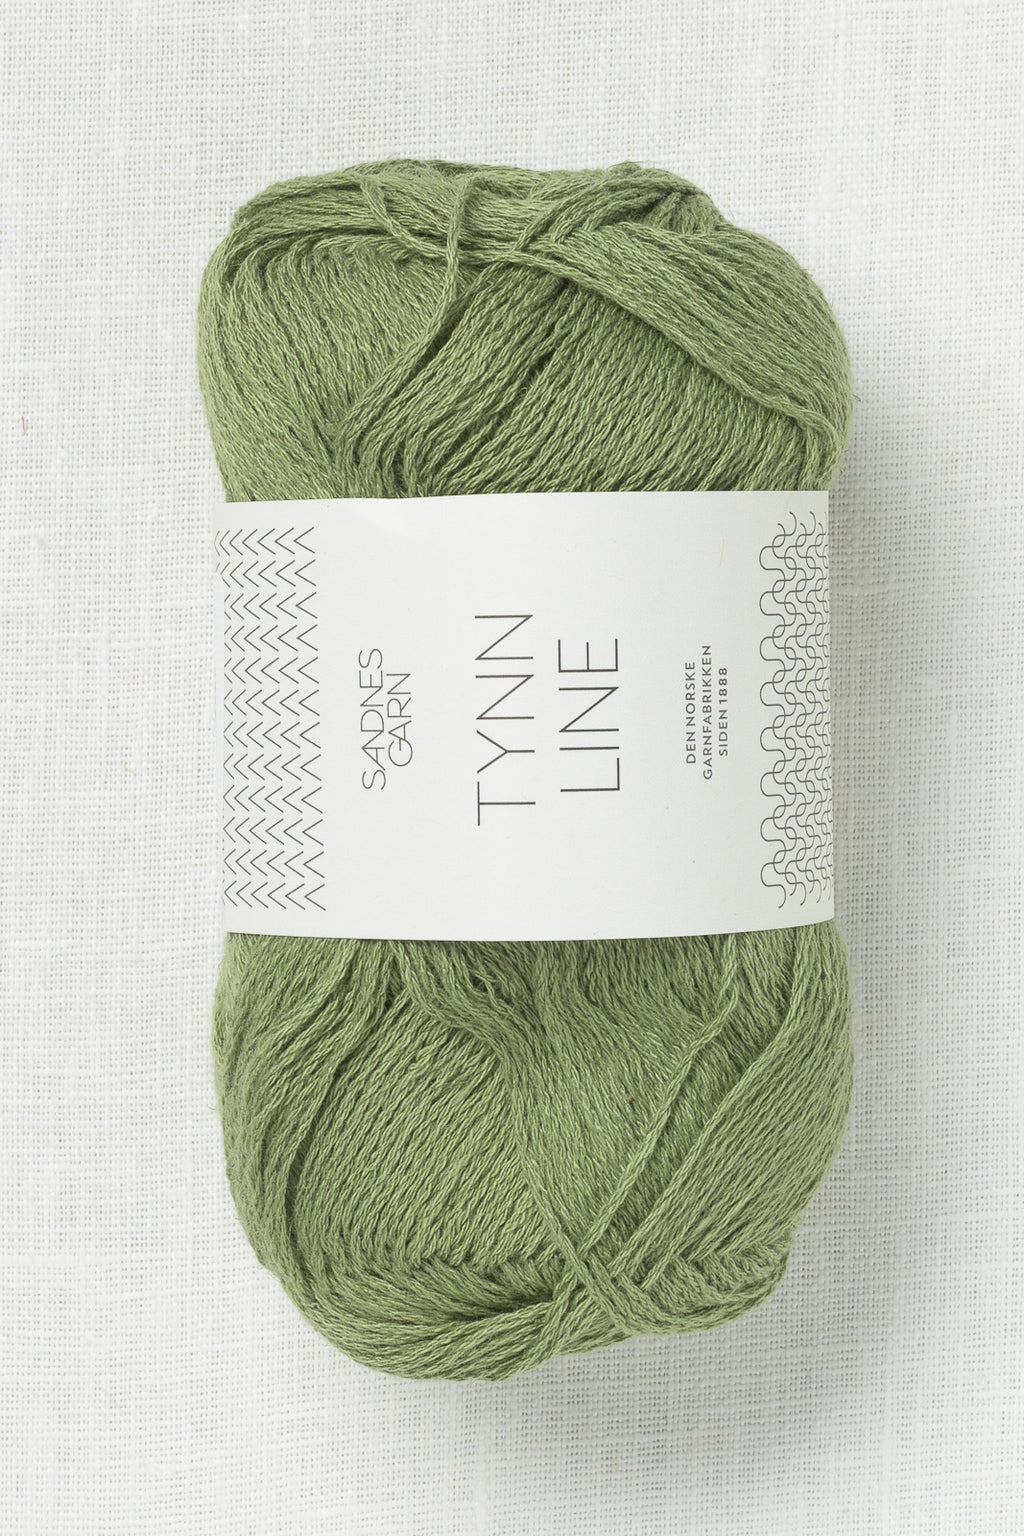 Botanical Color - Organic Wool, Naturally Dyed - Jagger Yarn